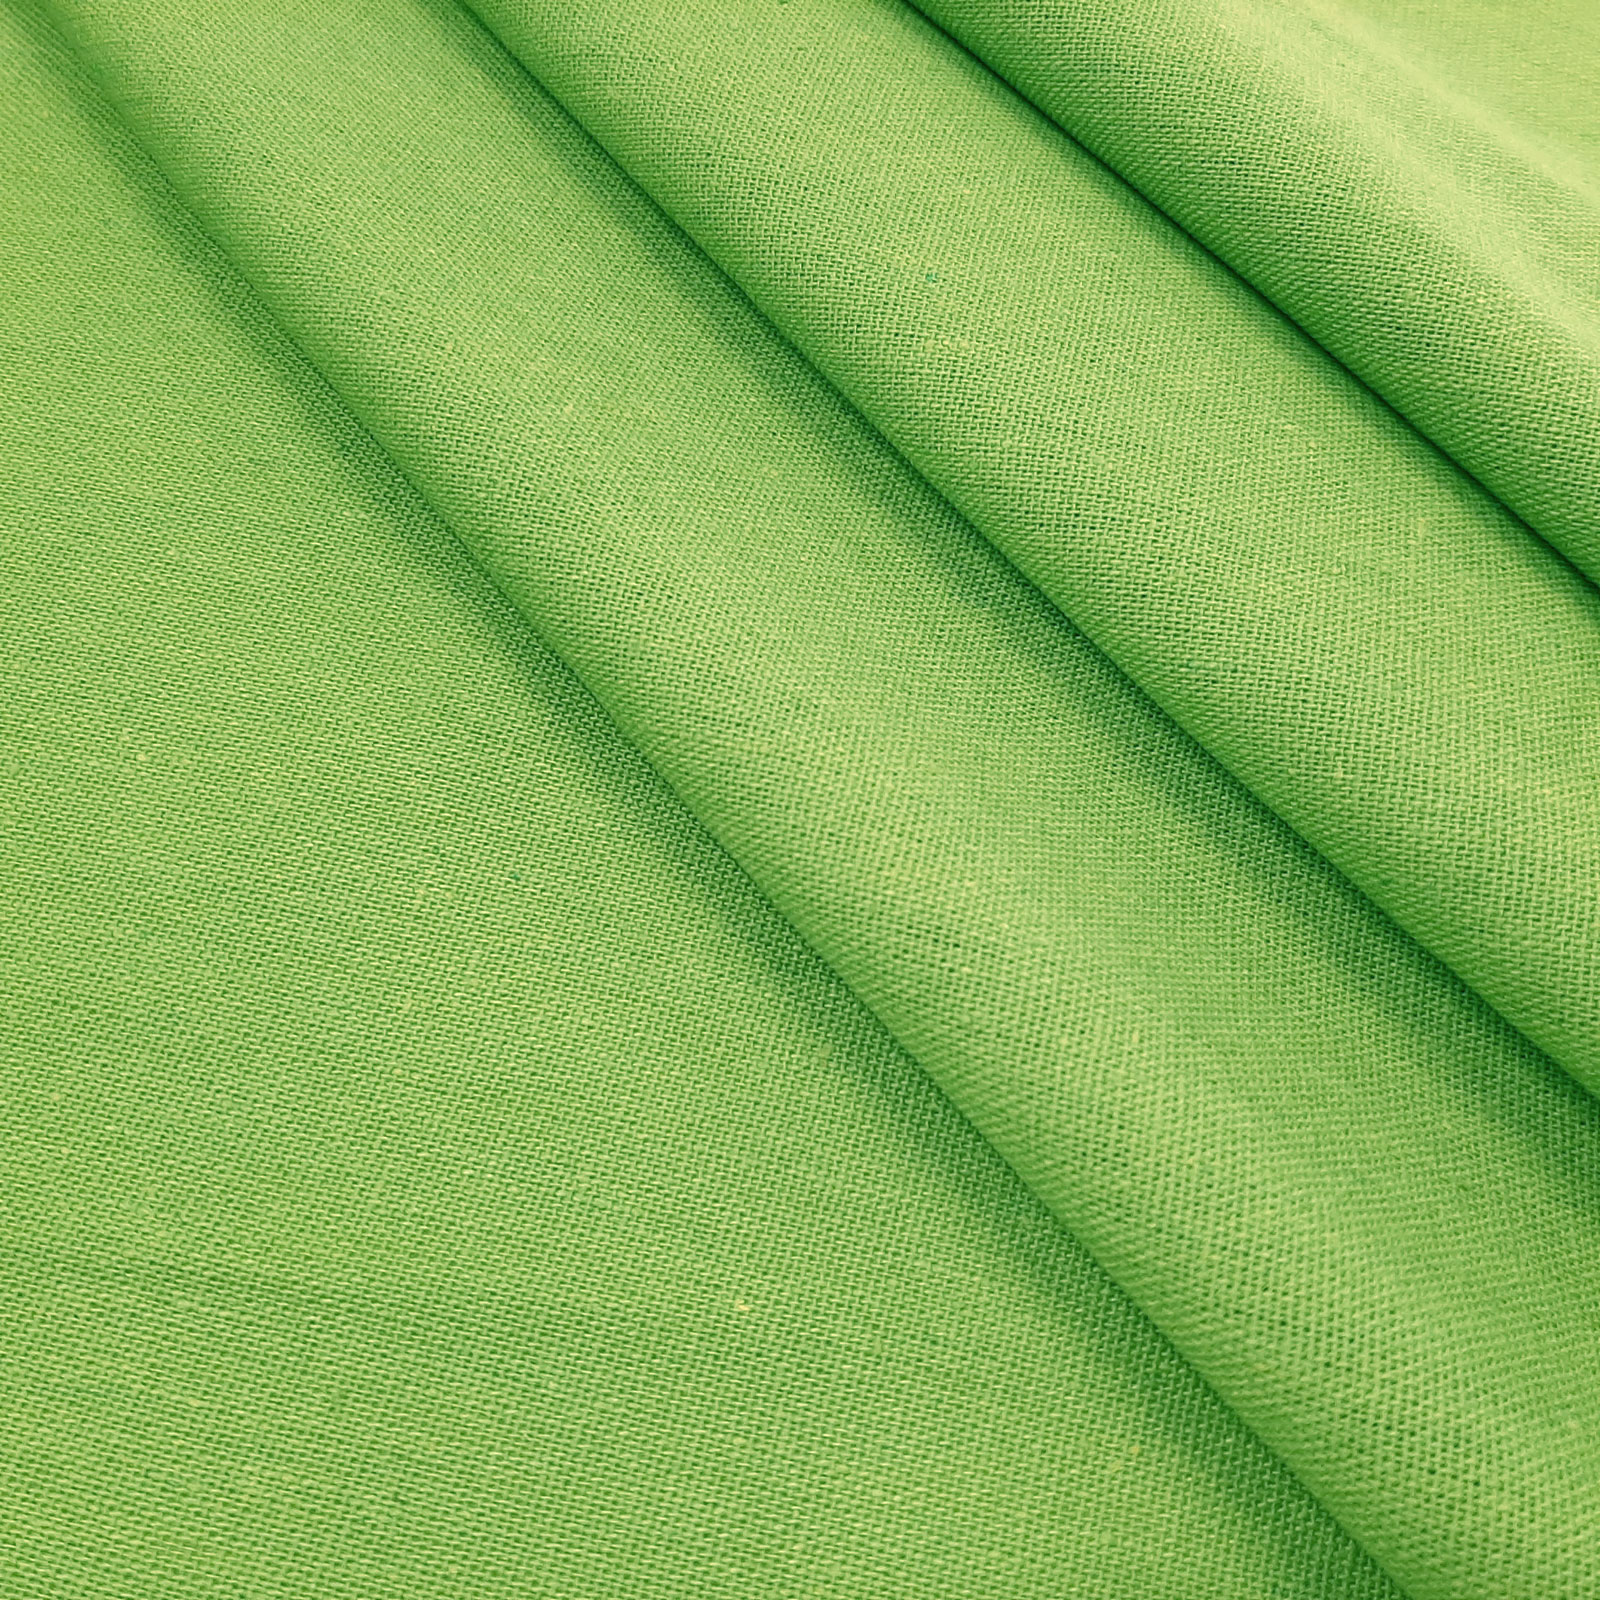 Bella - tela de algodón de lino natural - Pistacho